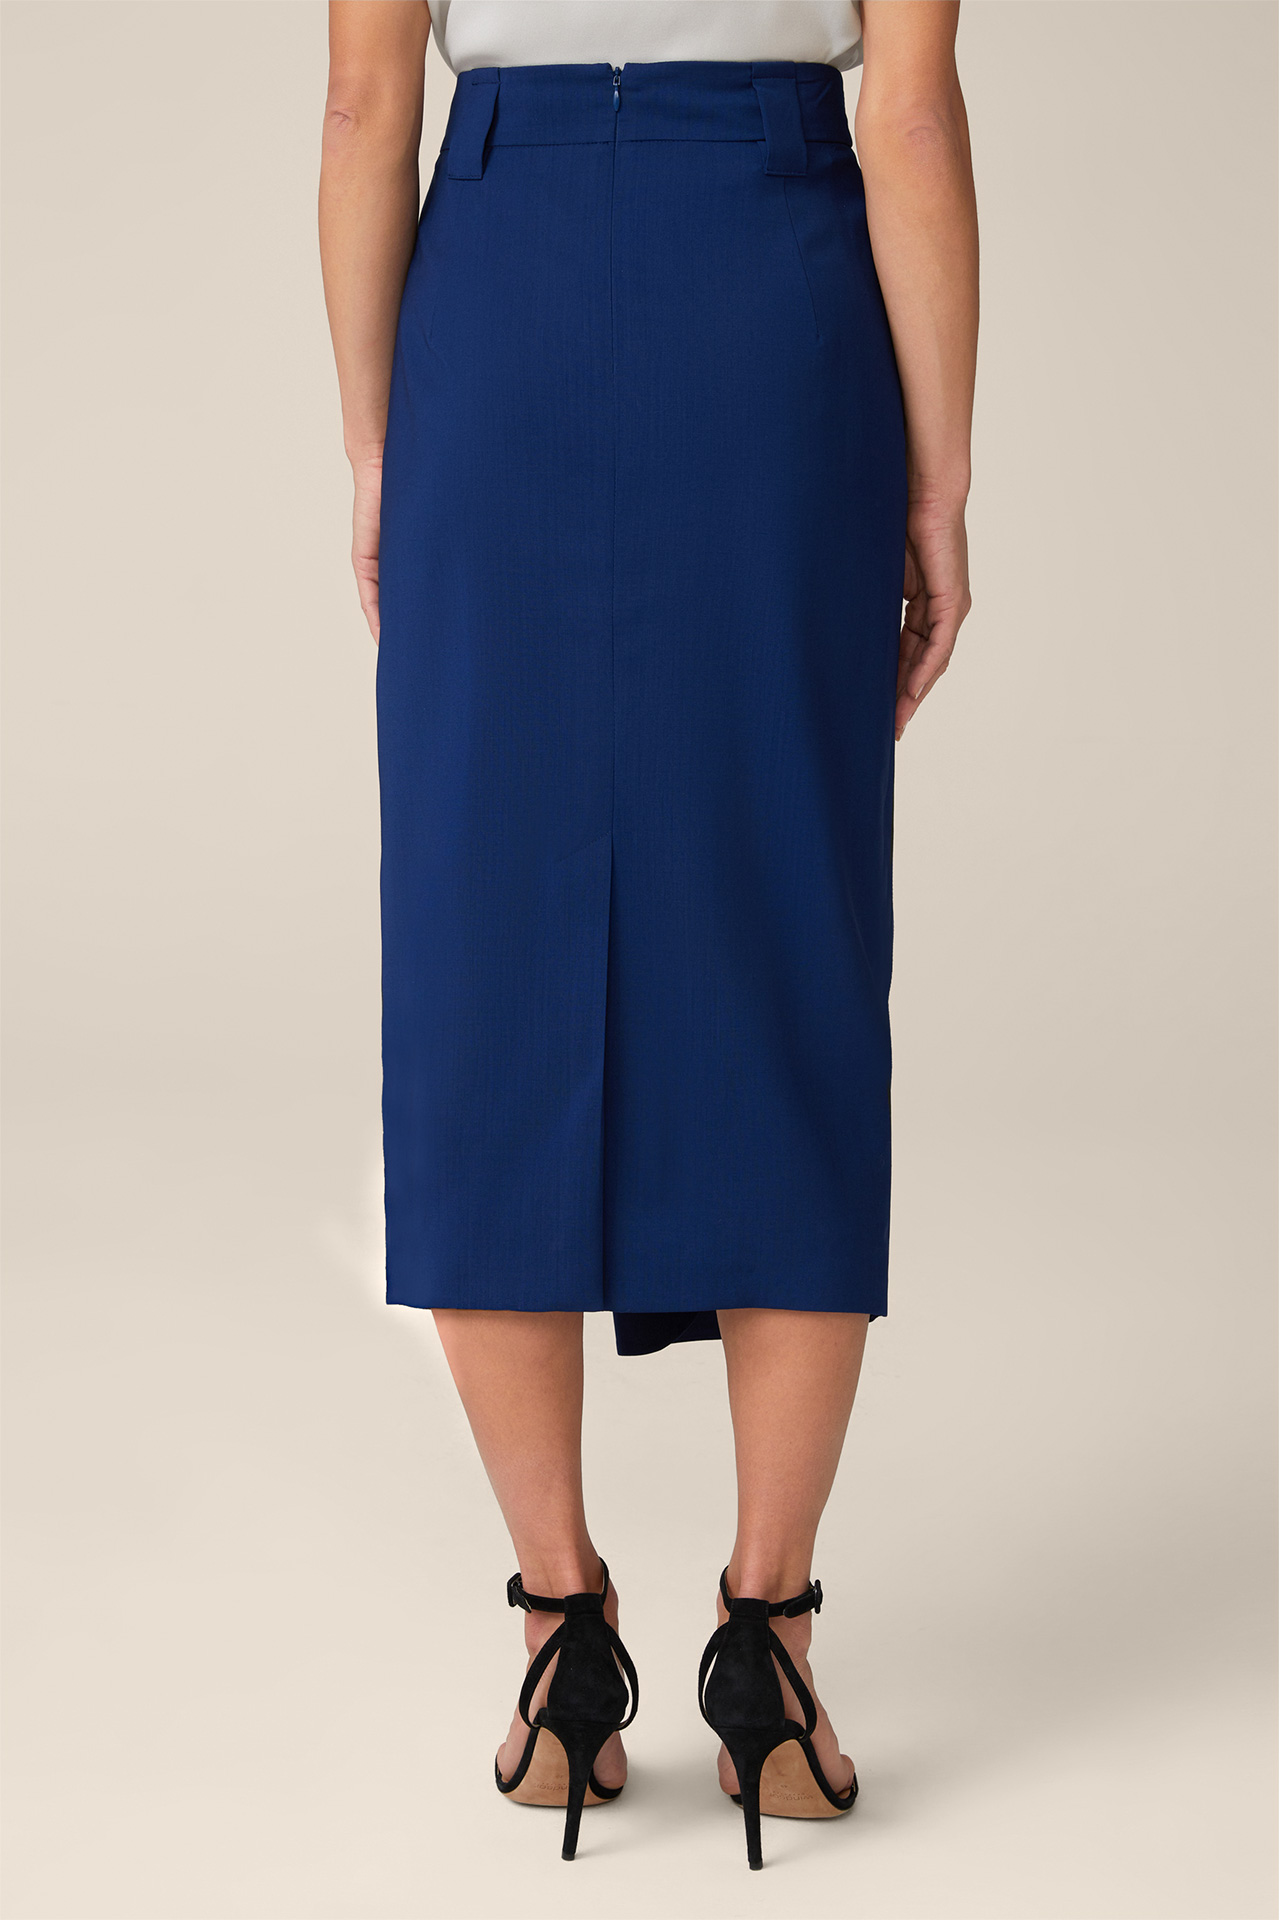 Virgin Wool Midi Length Skirt with Wrapover in Blue